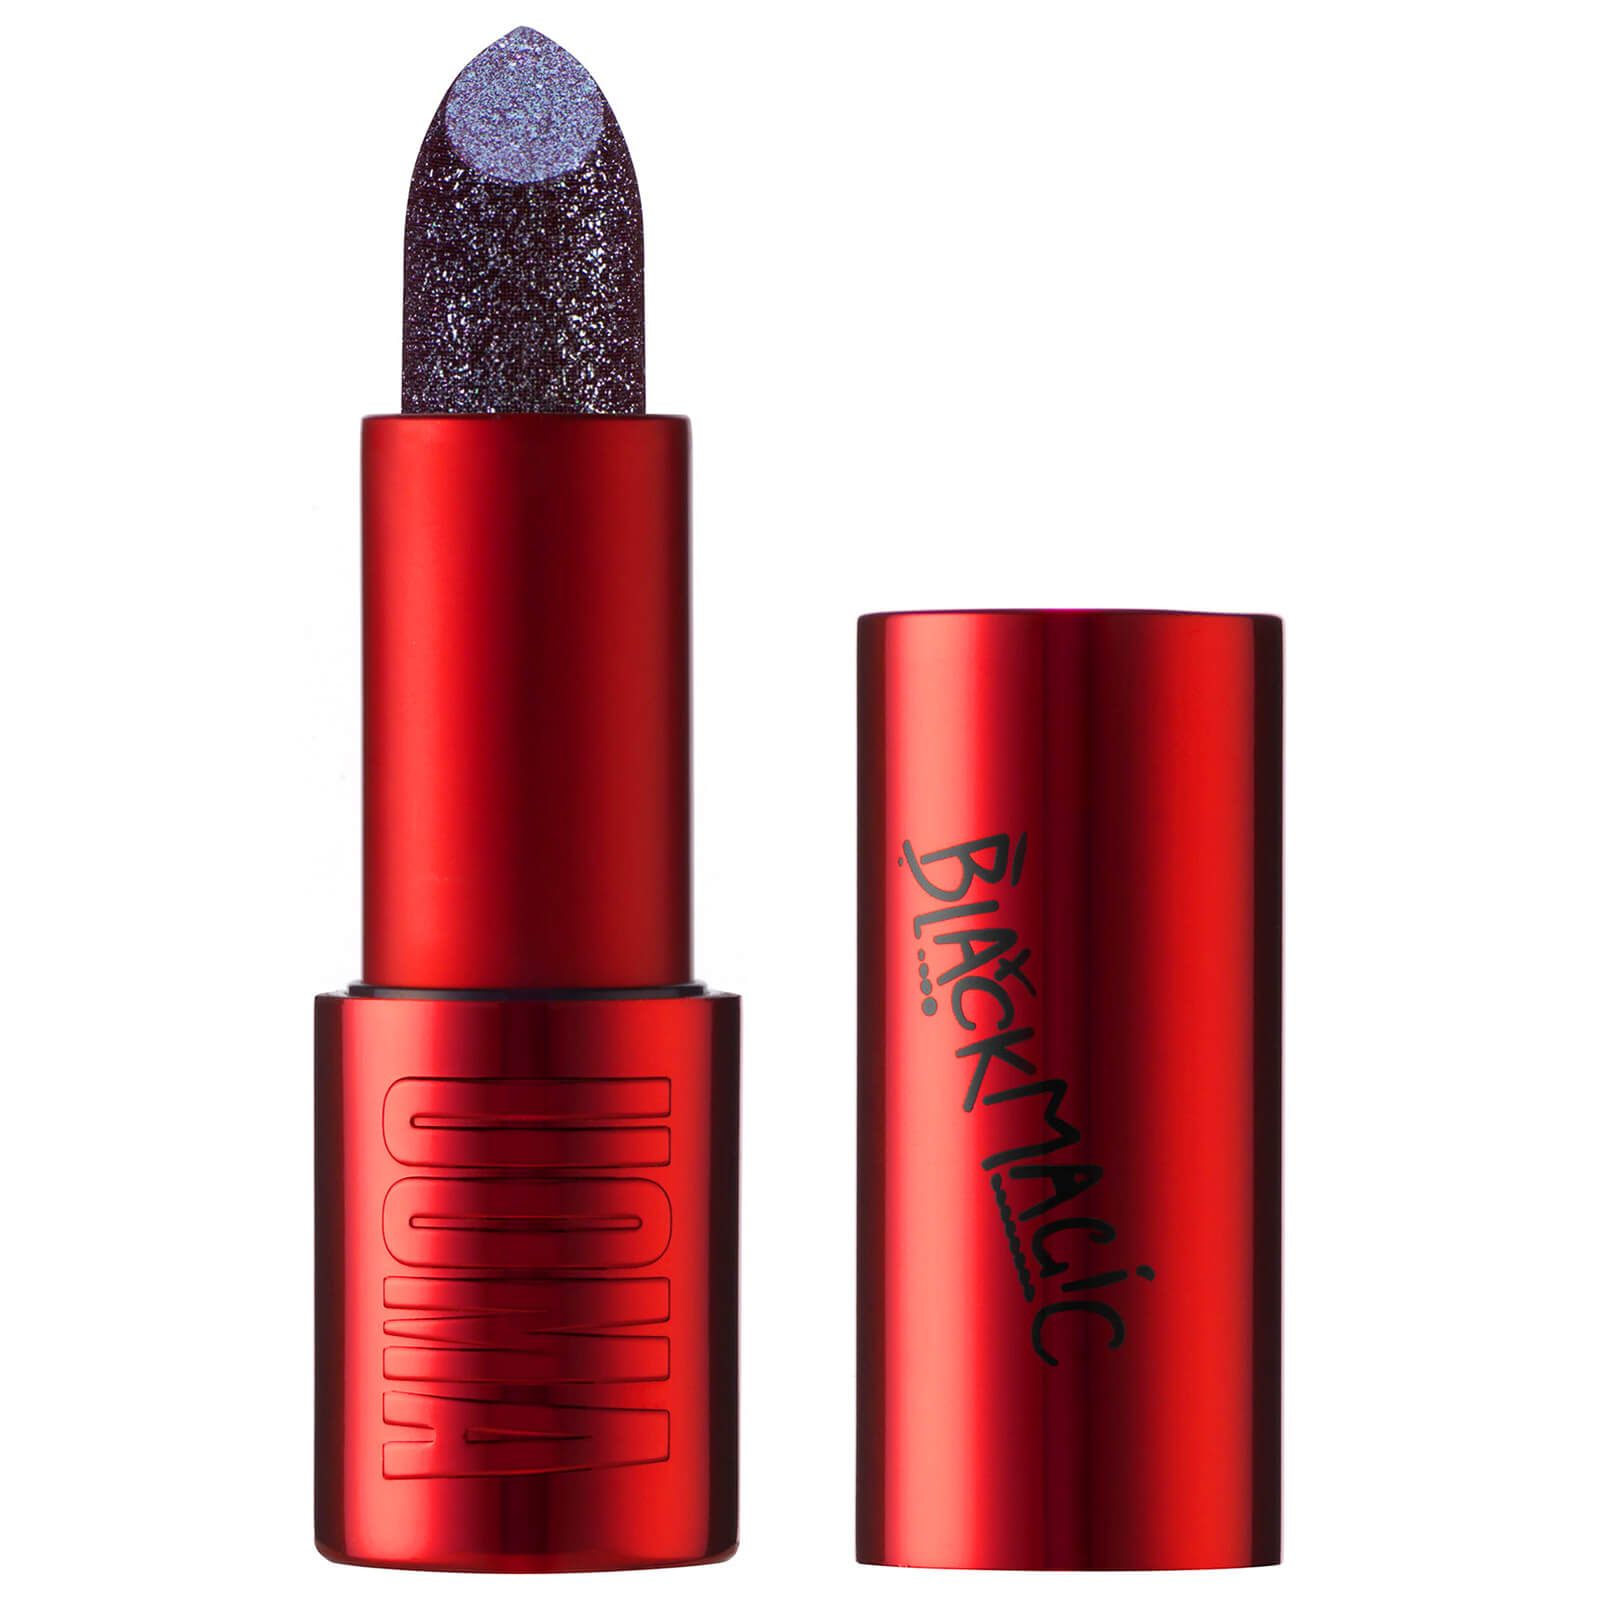 UOMA Beauty Black Magic Hypnotic Impact Metallic Lipstick 3ml (Various Shades) - Mother